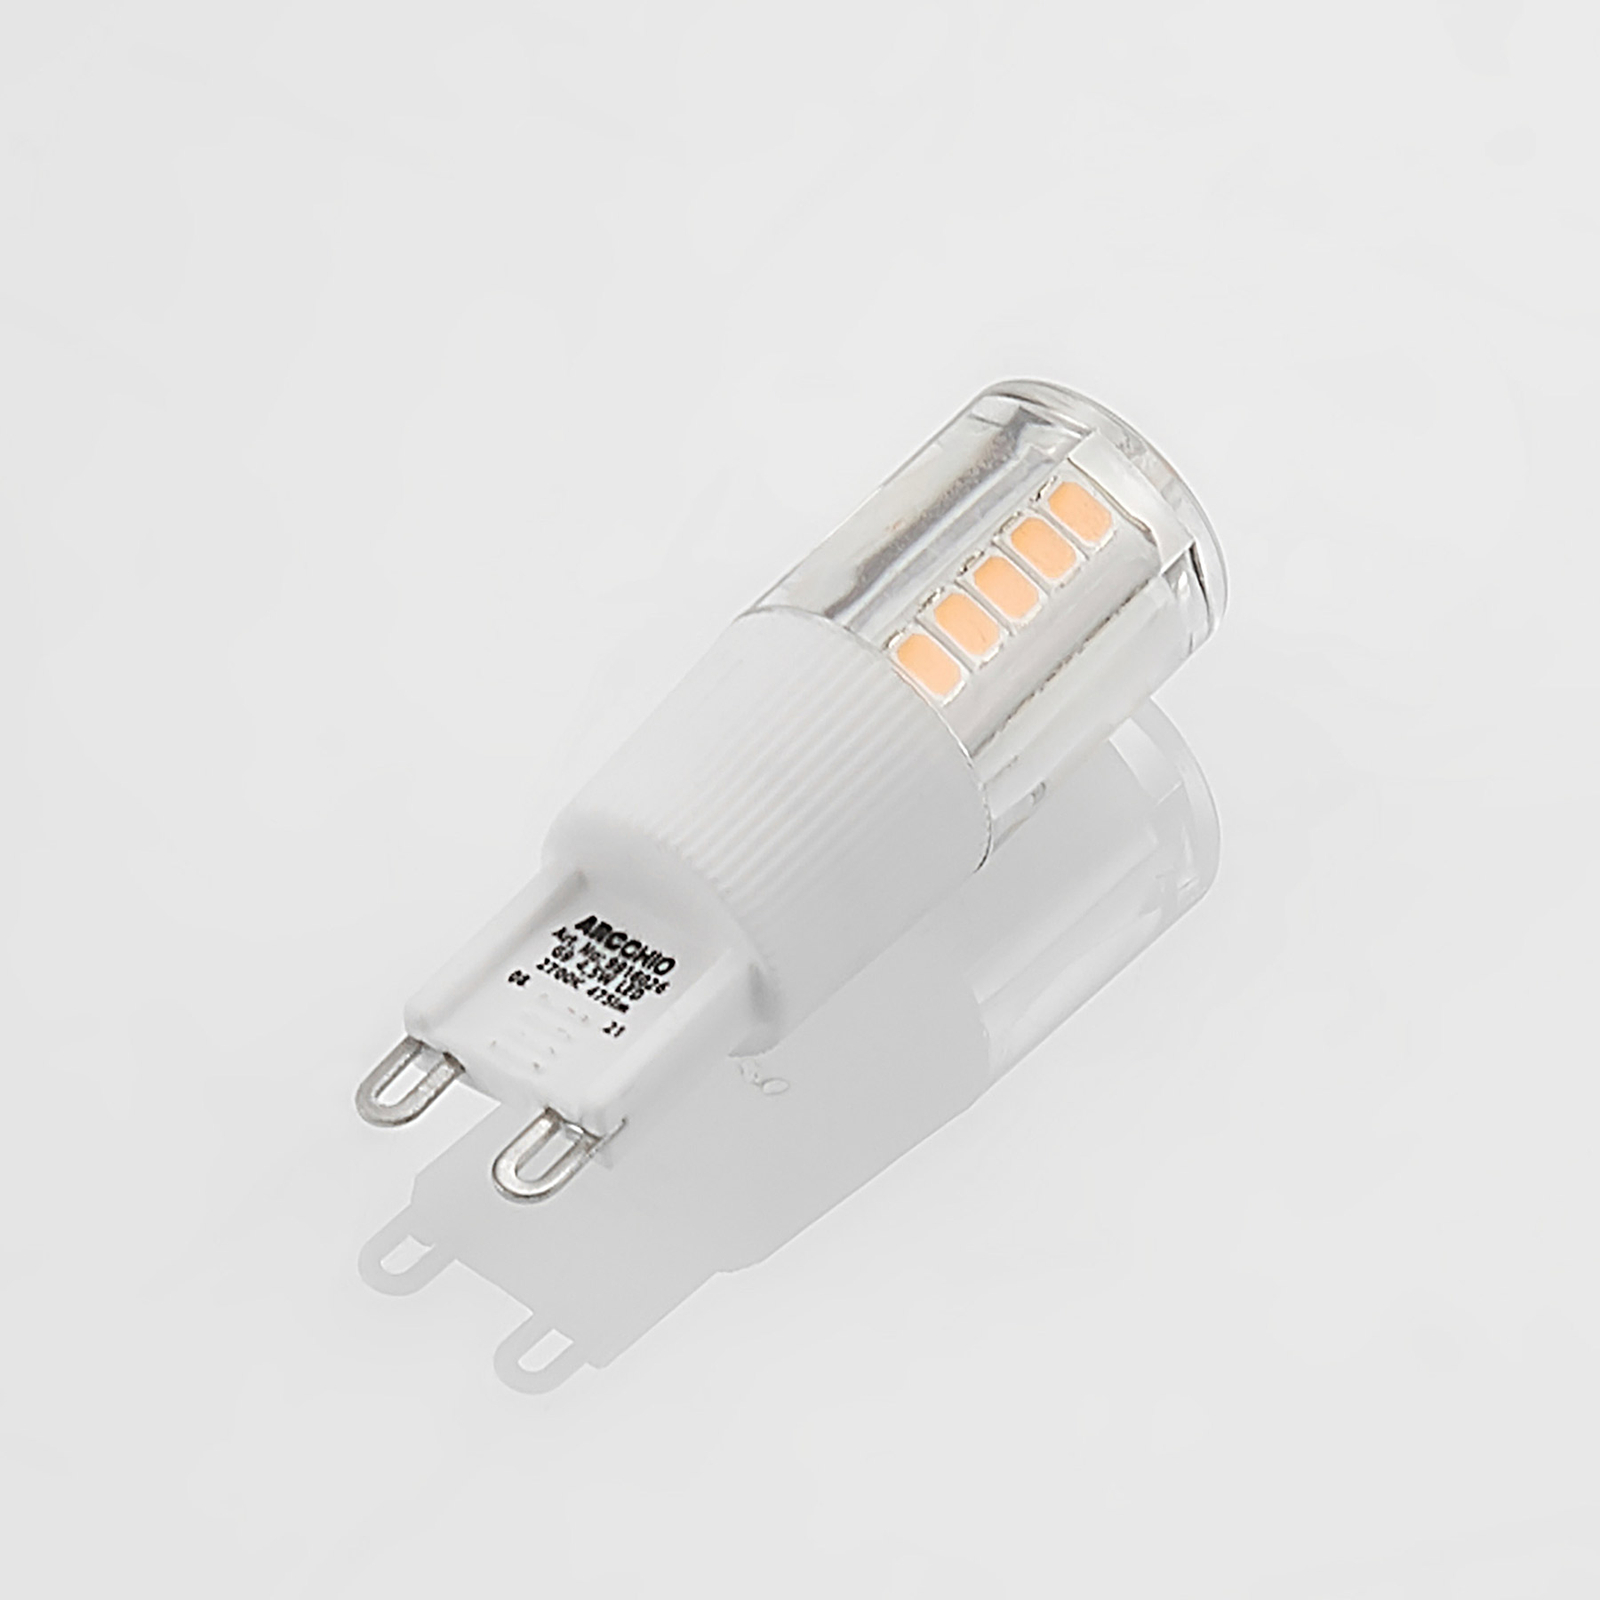 Arcchio bombilla LED bi-pin G9 4,5W 2.700K 4 ud